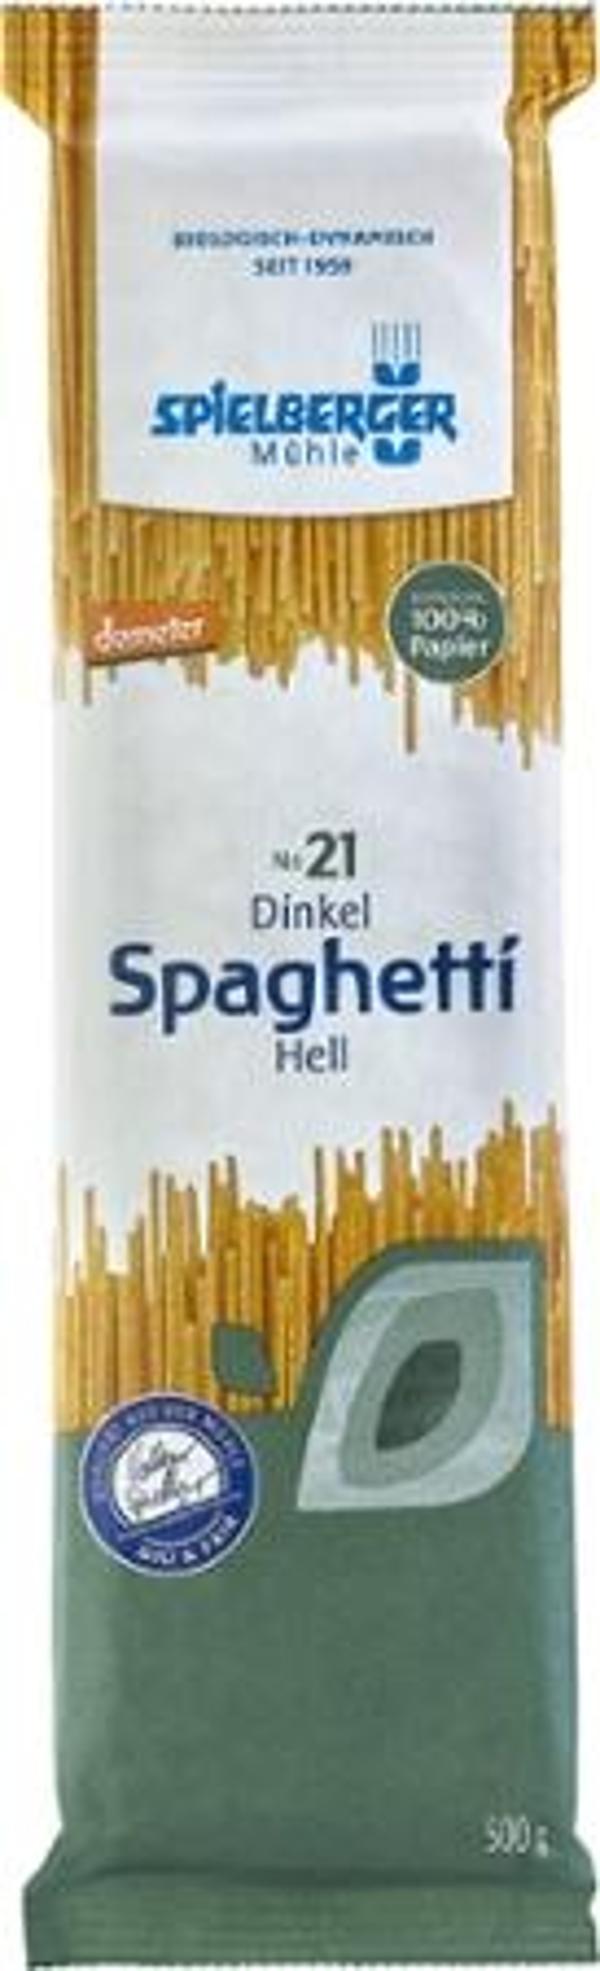 Produktfoto zu Dinkel Spaghetti hell, 500 g